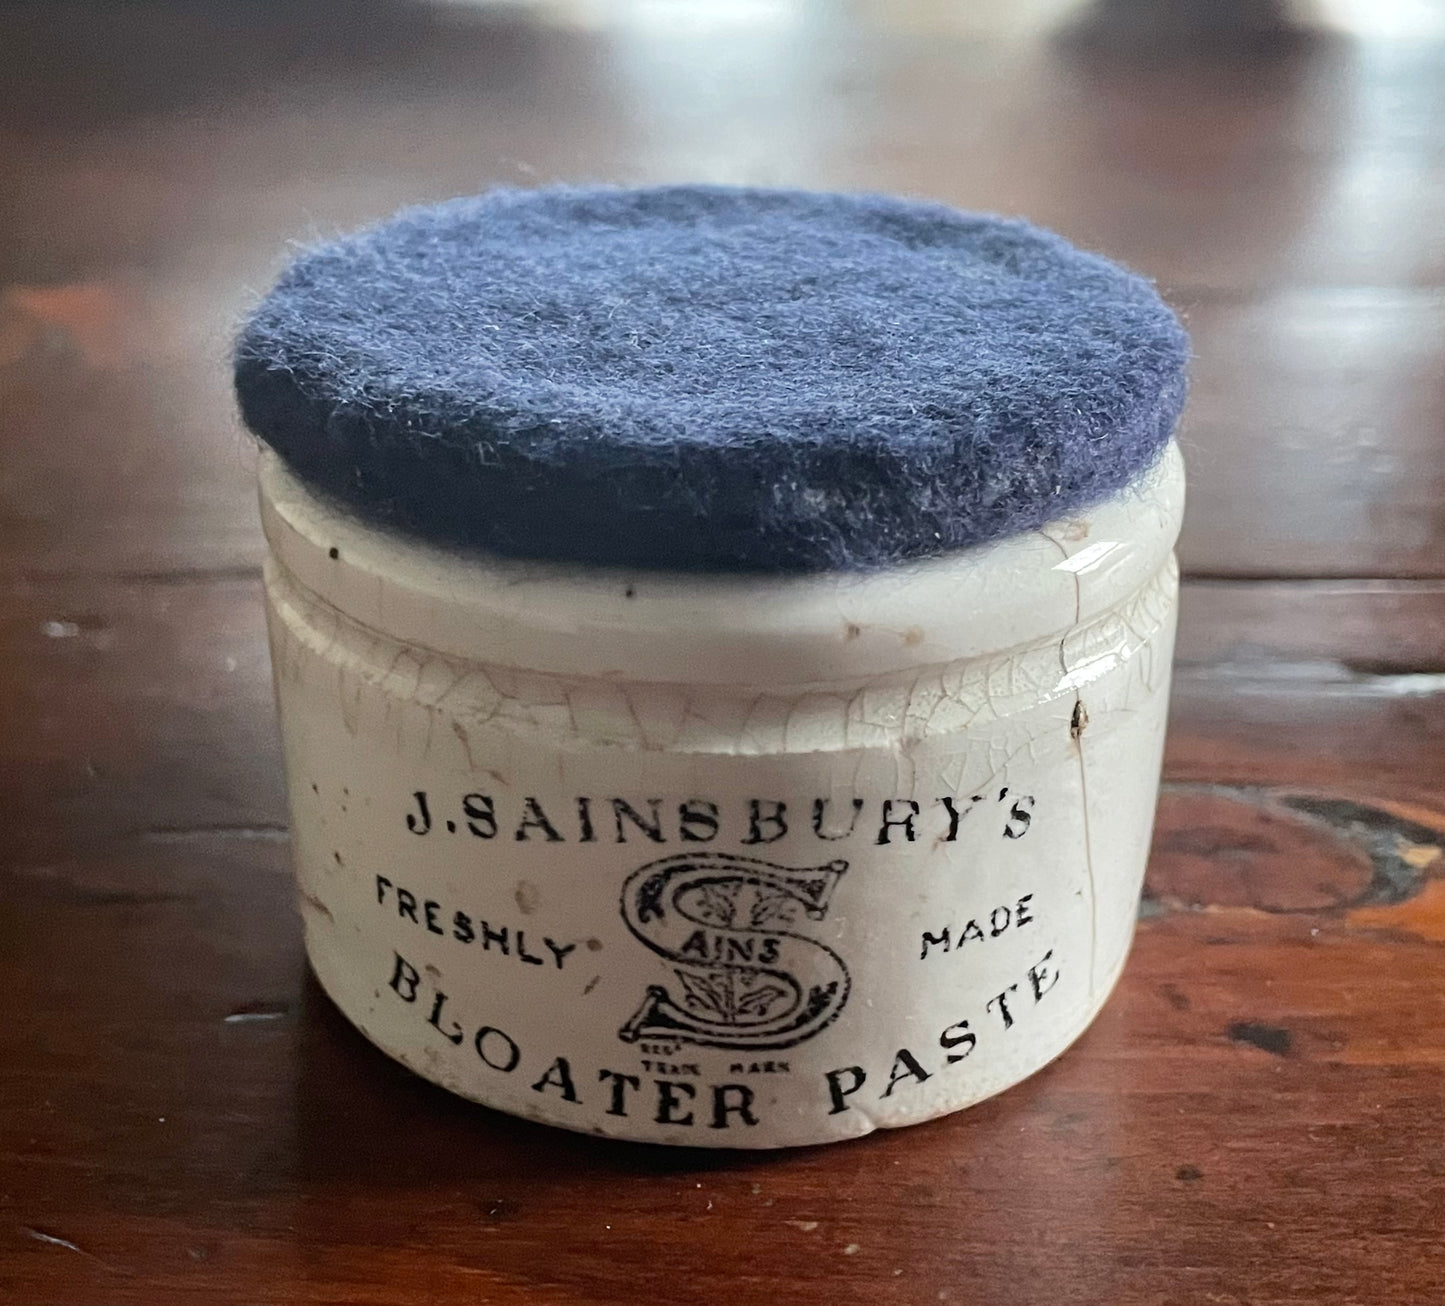 Antique Stoneware Inkwell - J. Sainsbury's Bloater Paste